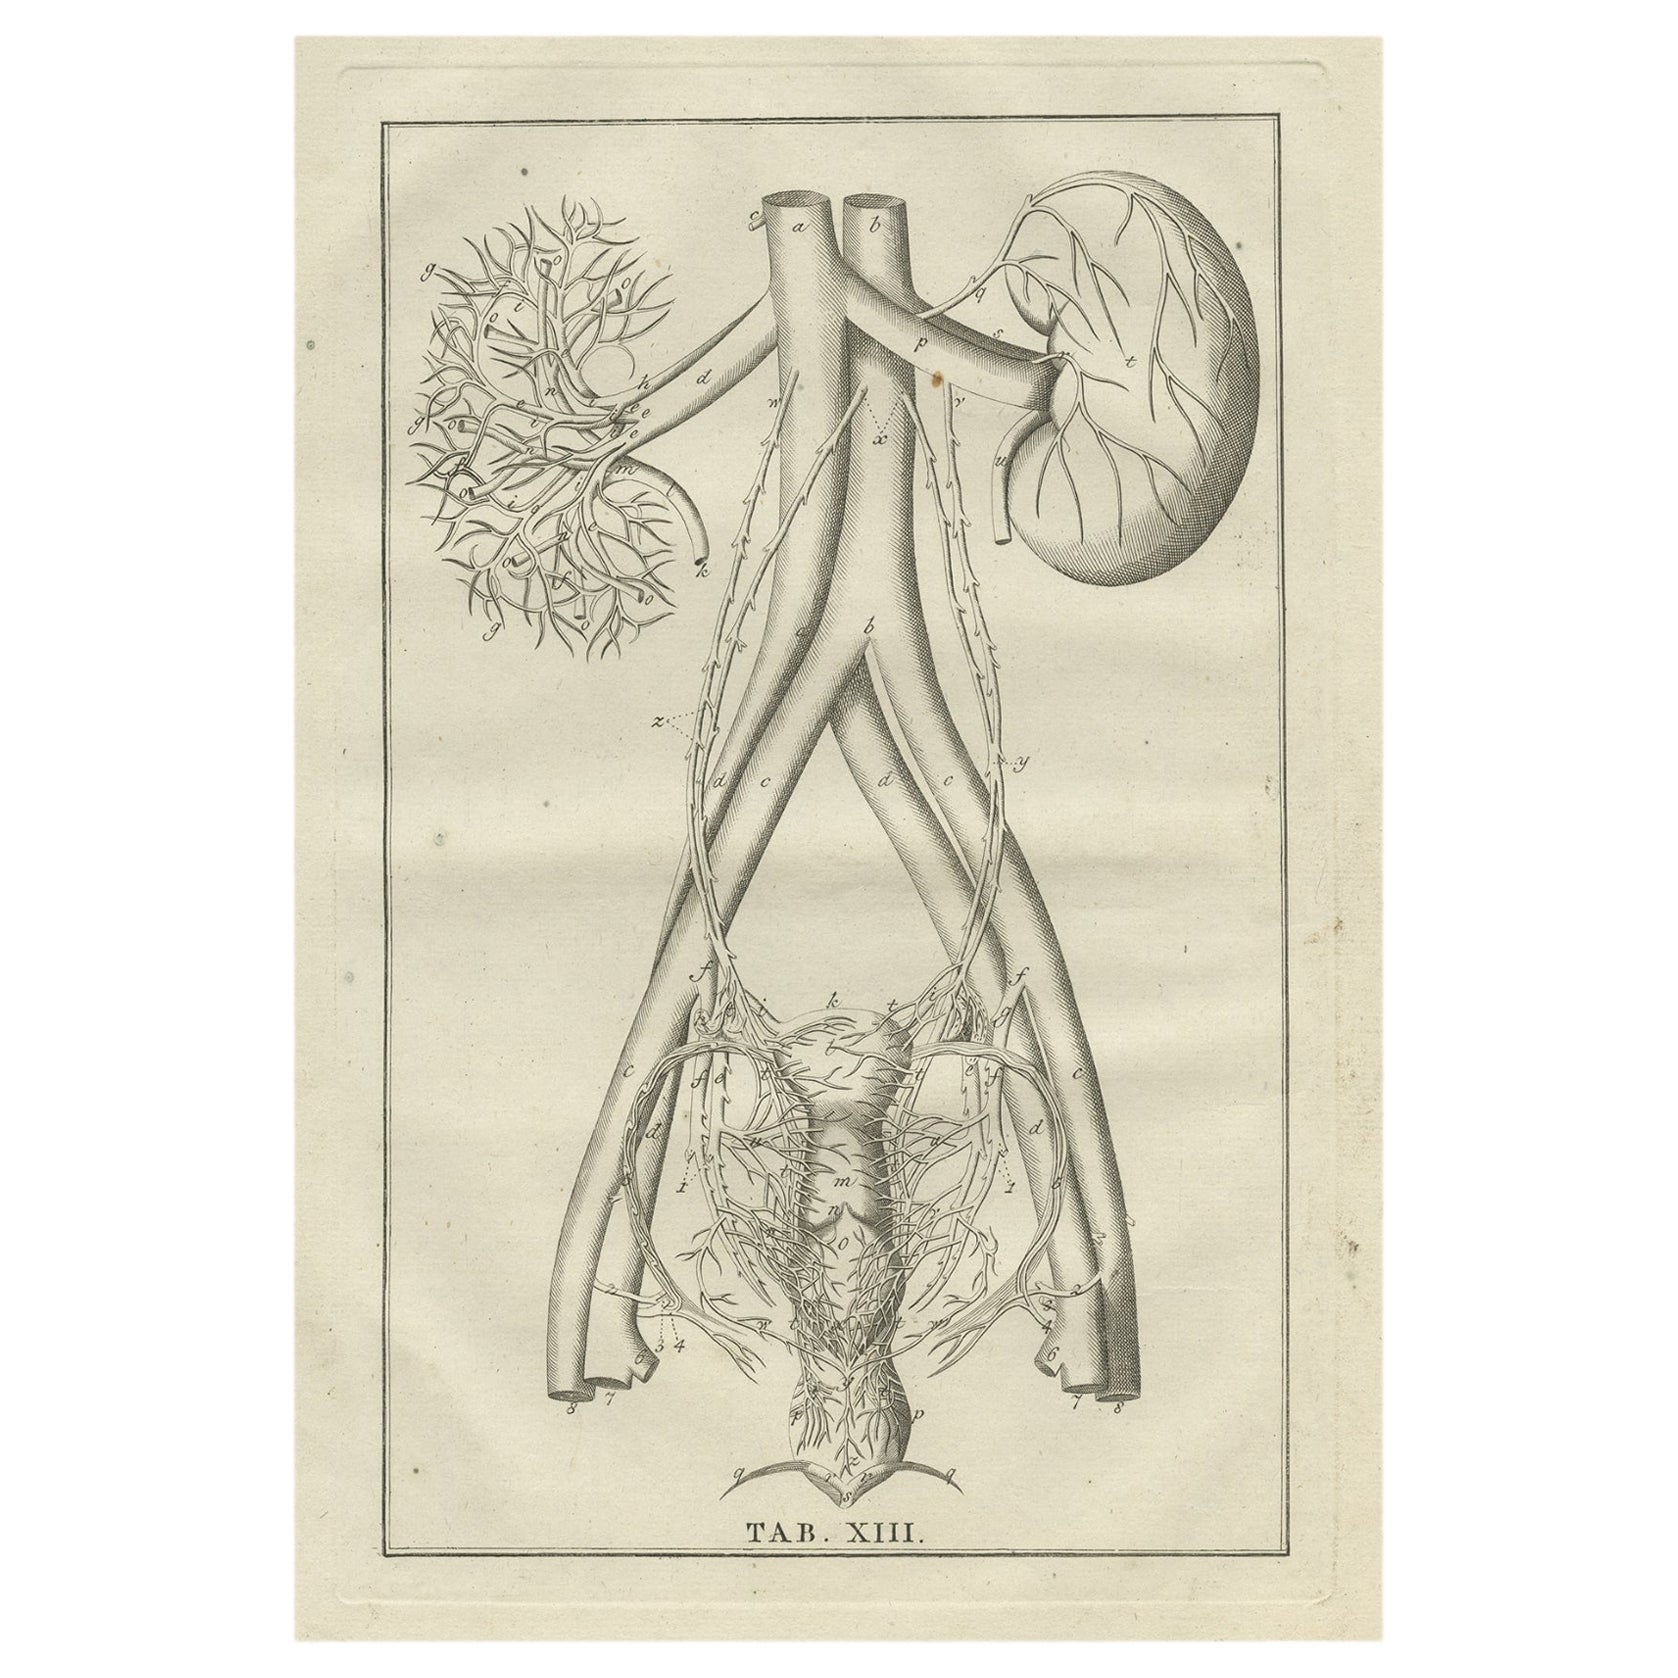 Antique Anatomy Print of the Endocrine System Showing Kidneys, Uterus, etc, 1798